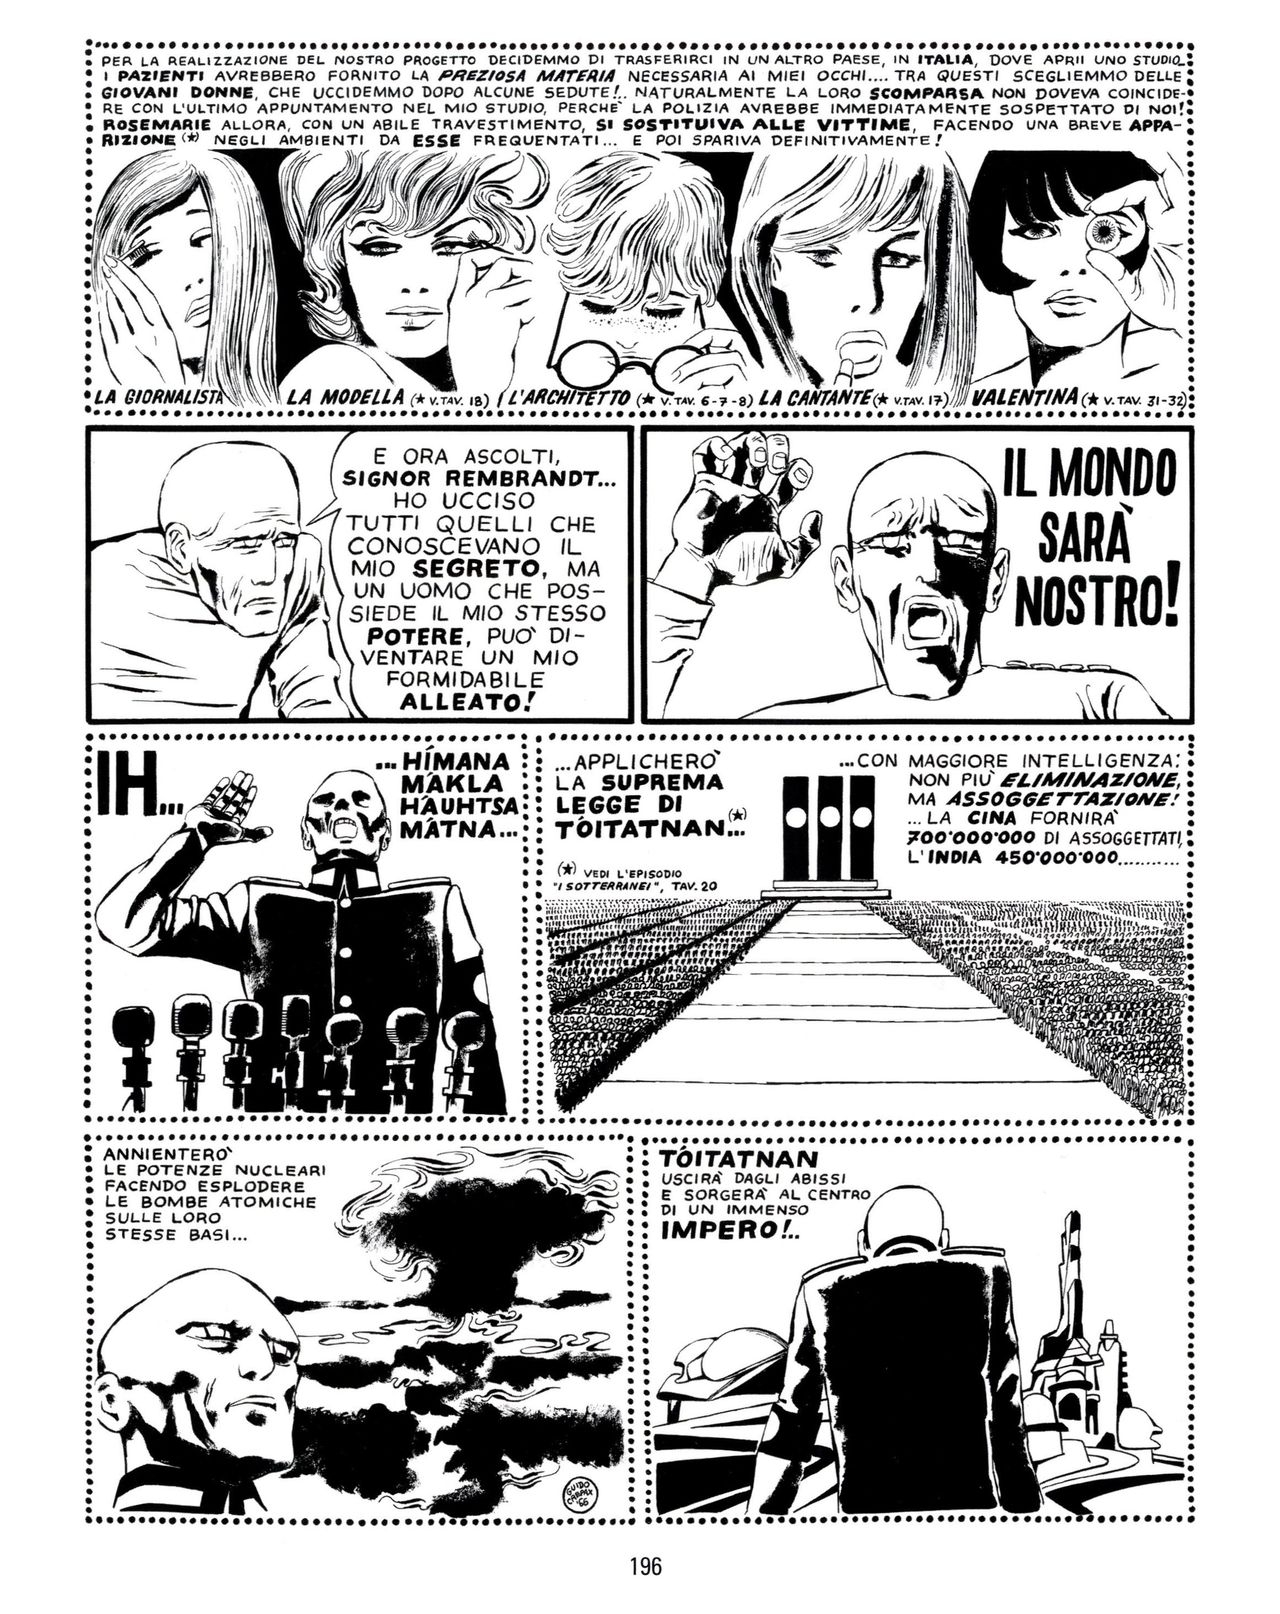 [Guido Crepax] Erotica Fumetti #25 : L'ascesa dei sotterranei : I cavalieri ciechi [Italian] 197